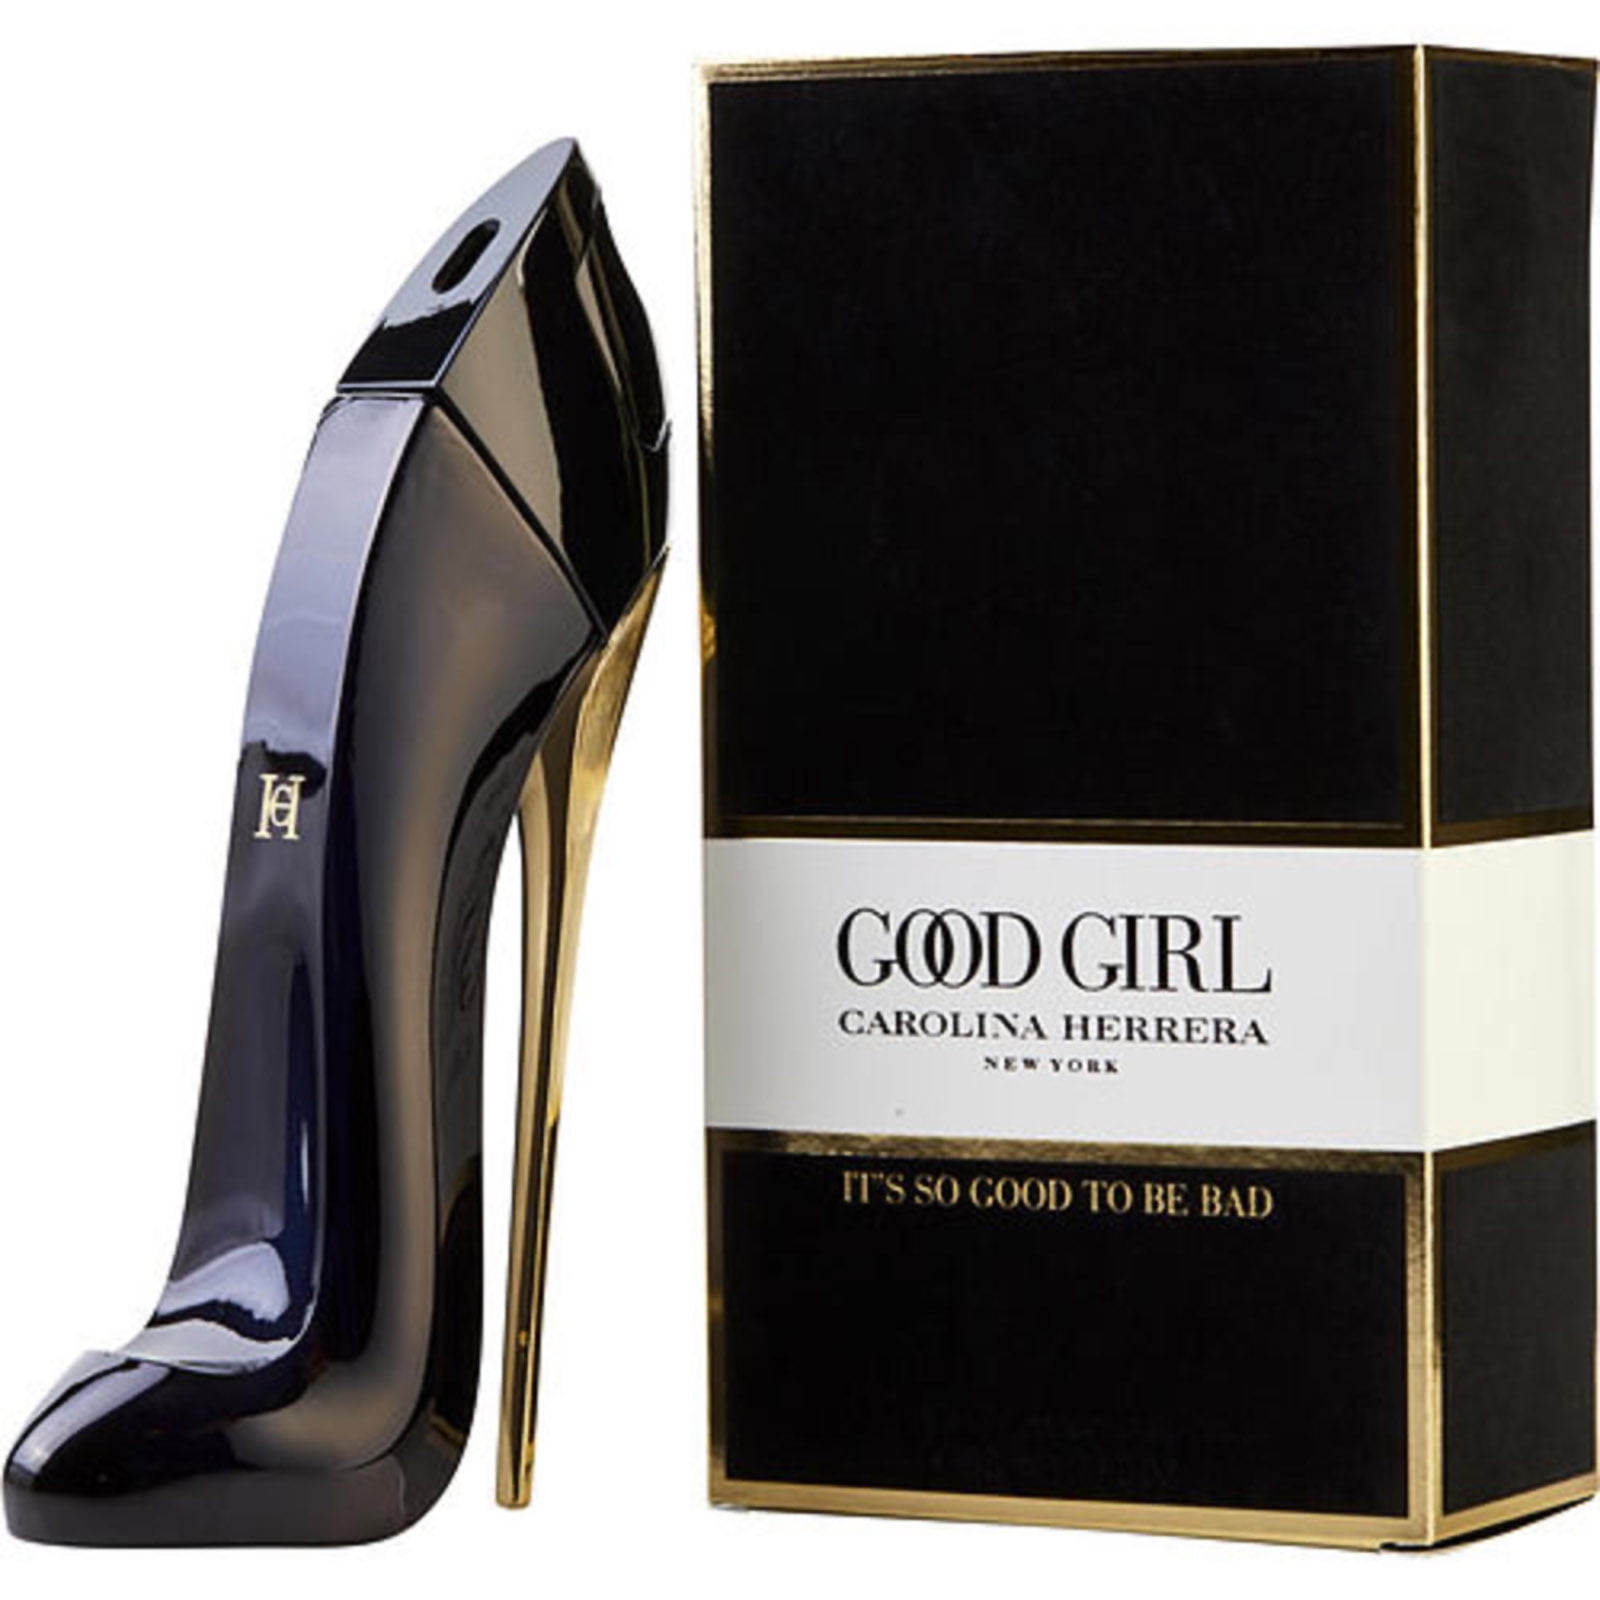 Carolina Herrera Ladies Good Girl EDP Spray 5 oz Fragrances 8411061958483  8411061026335 - Fragrances & Beauty, Good Girl - Jomashop